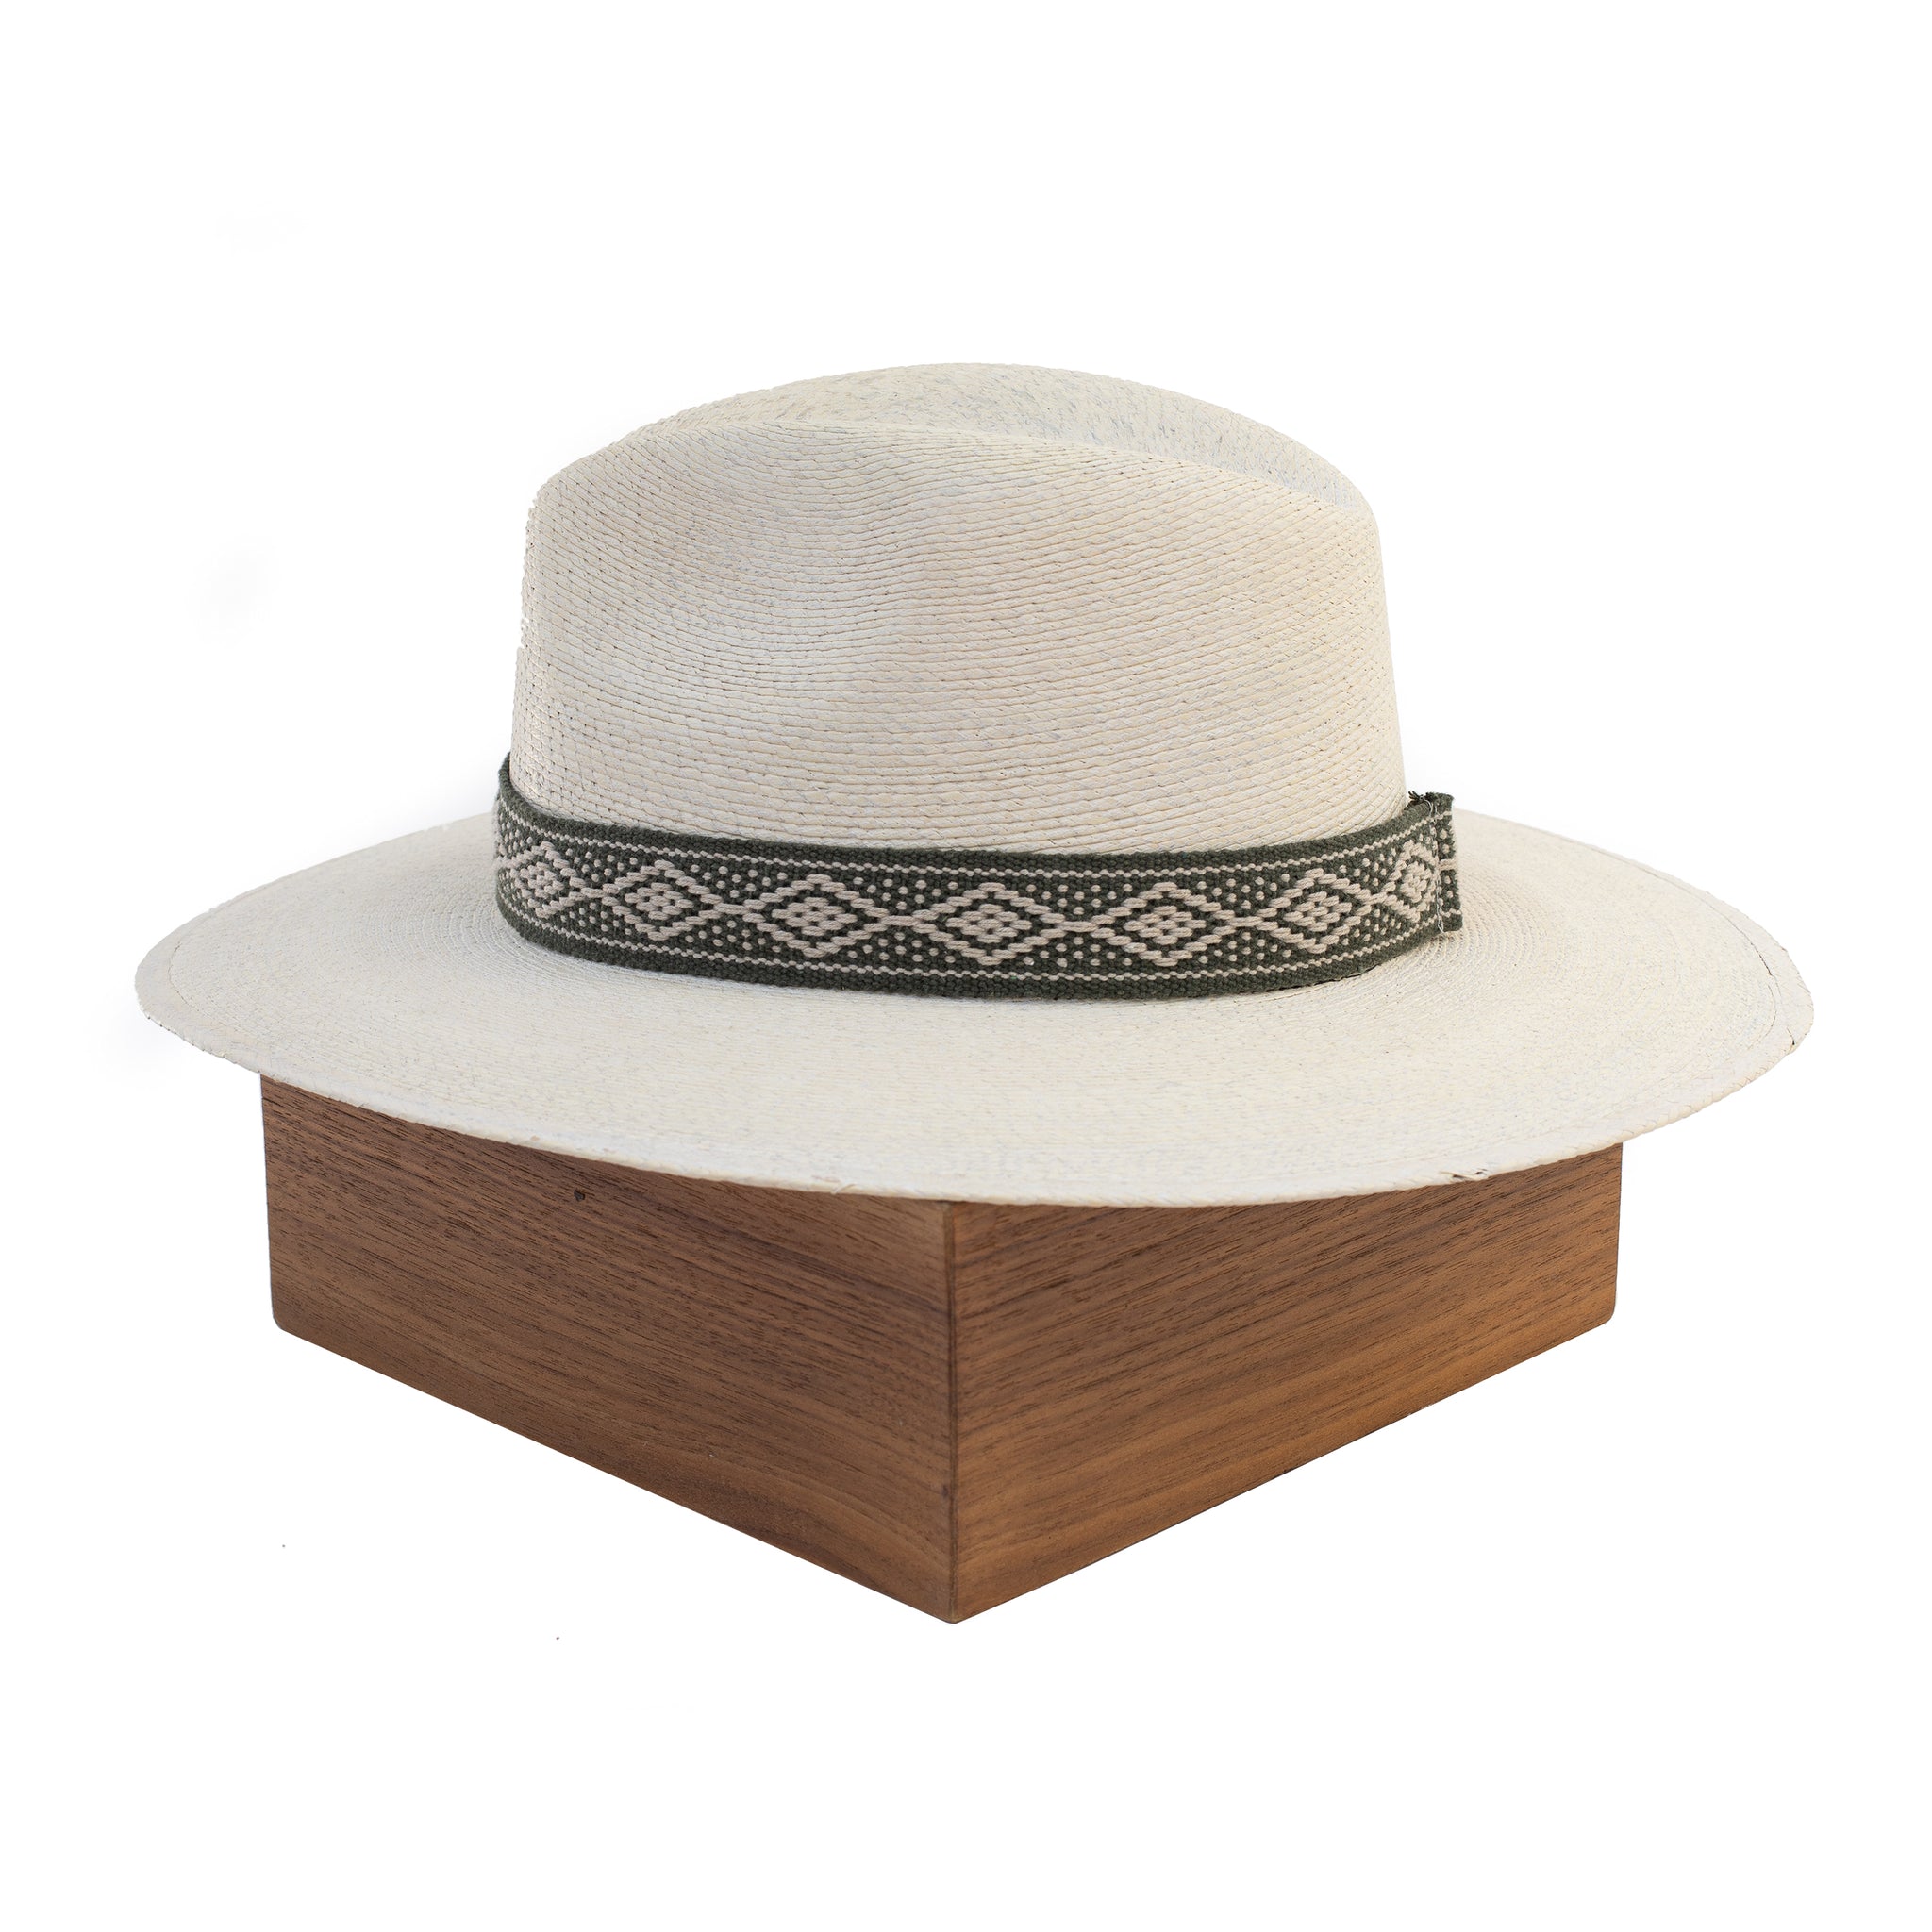 Sombrero de Palma